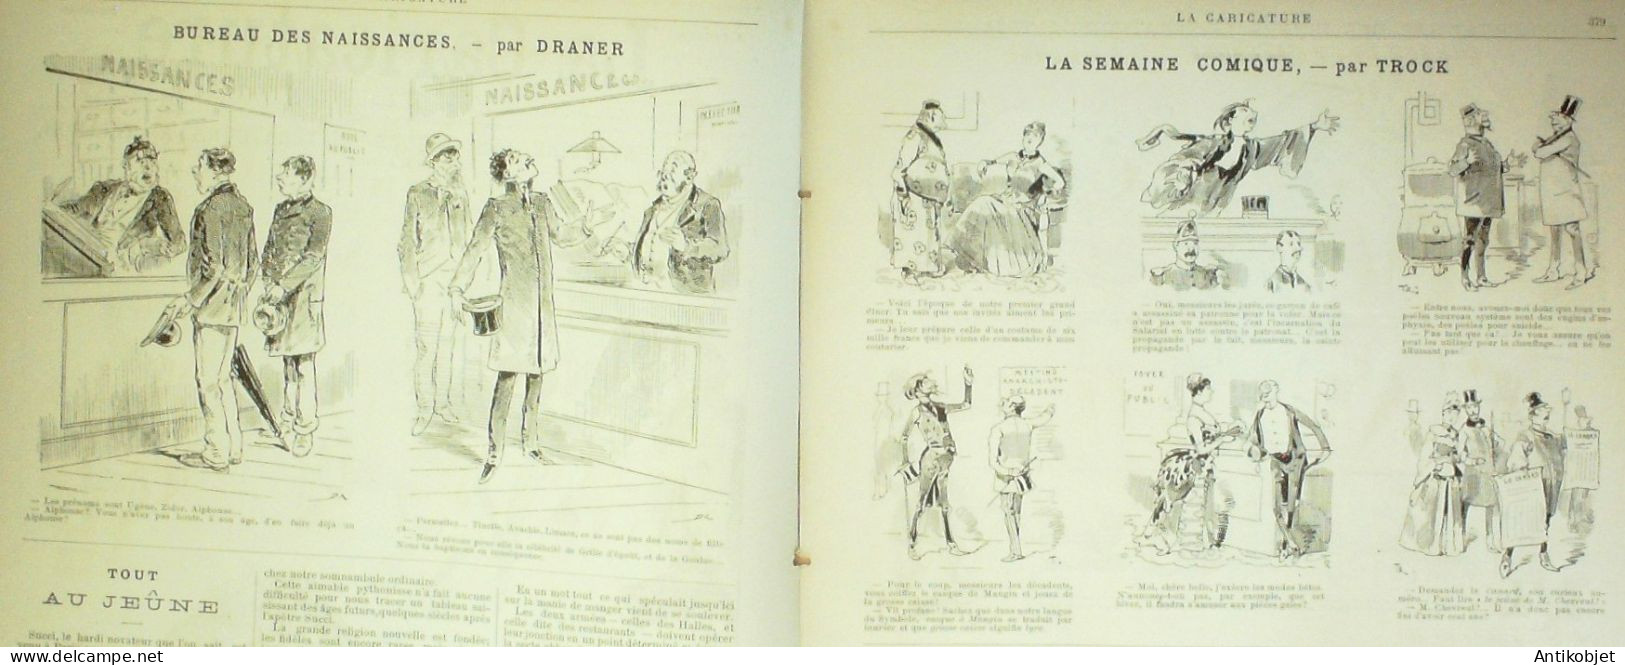 La Caricature 1886 N°360 Littérateurs à Trianon Robida Job L'esprit Fox - Magazines - Before 1900